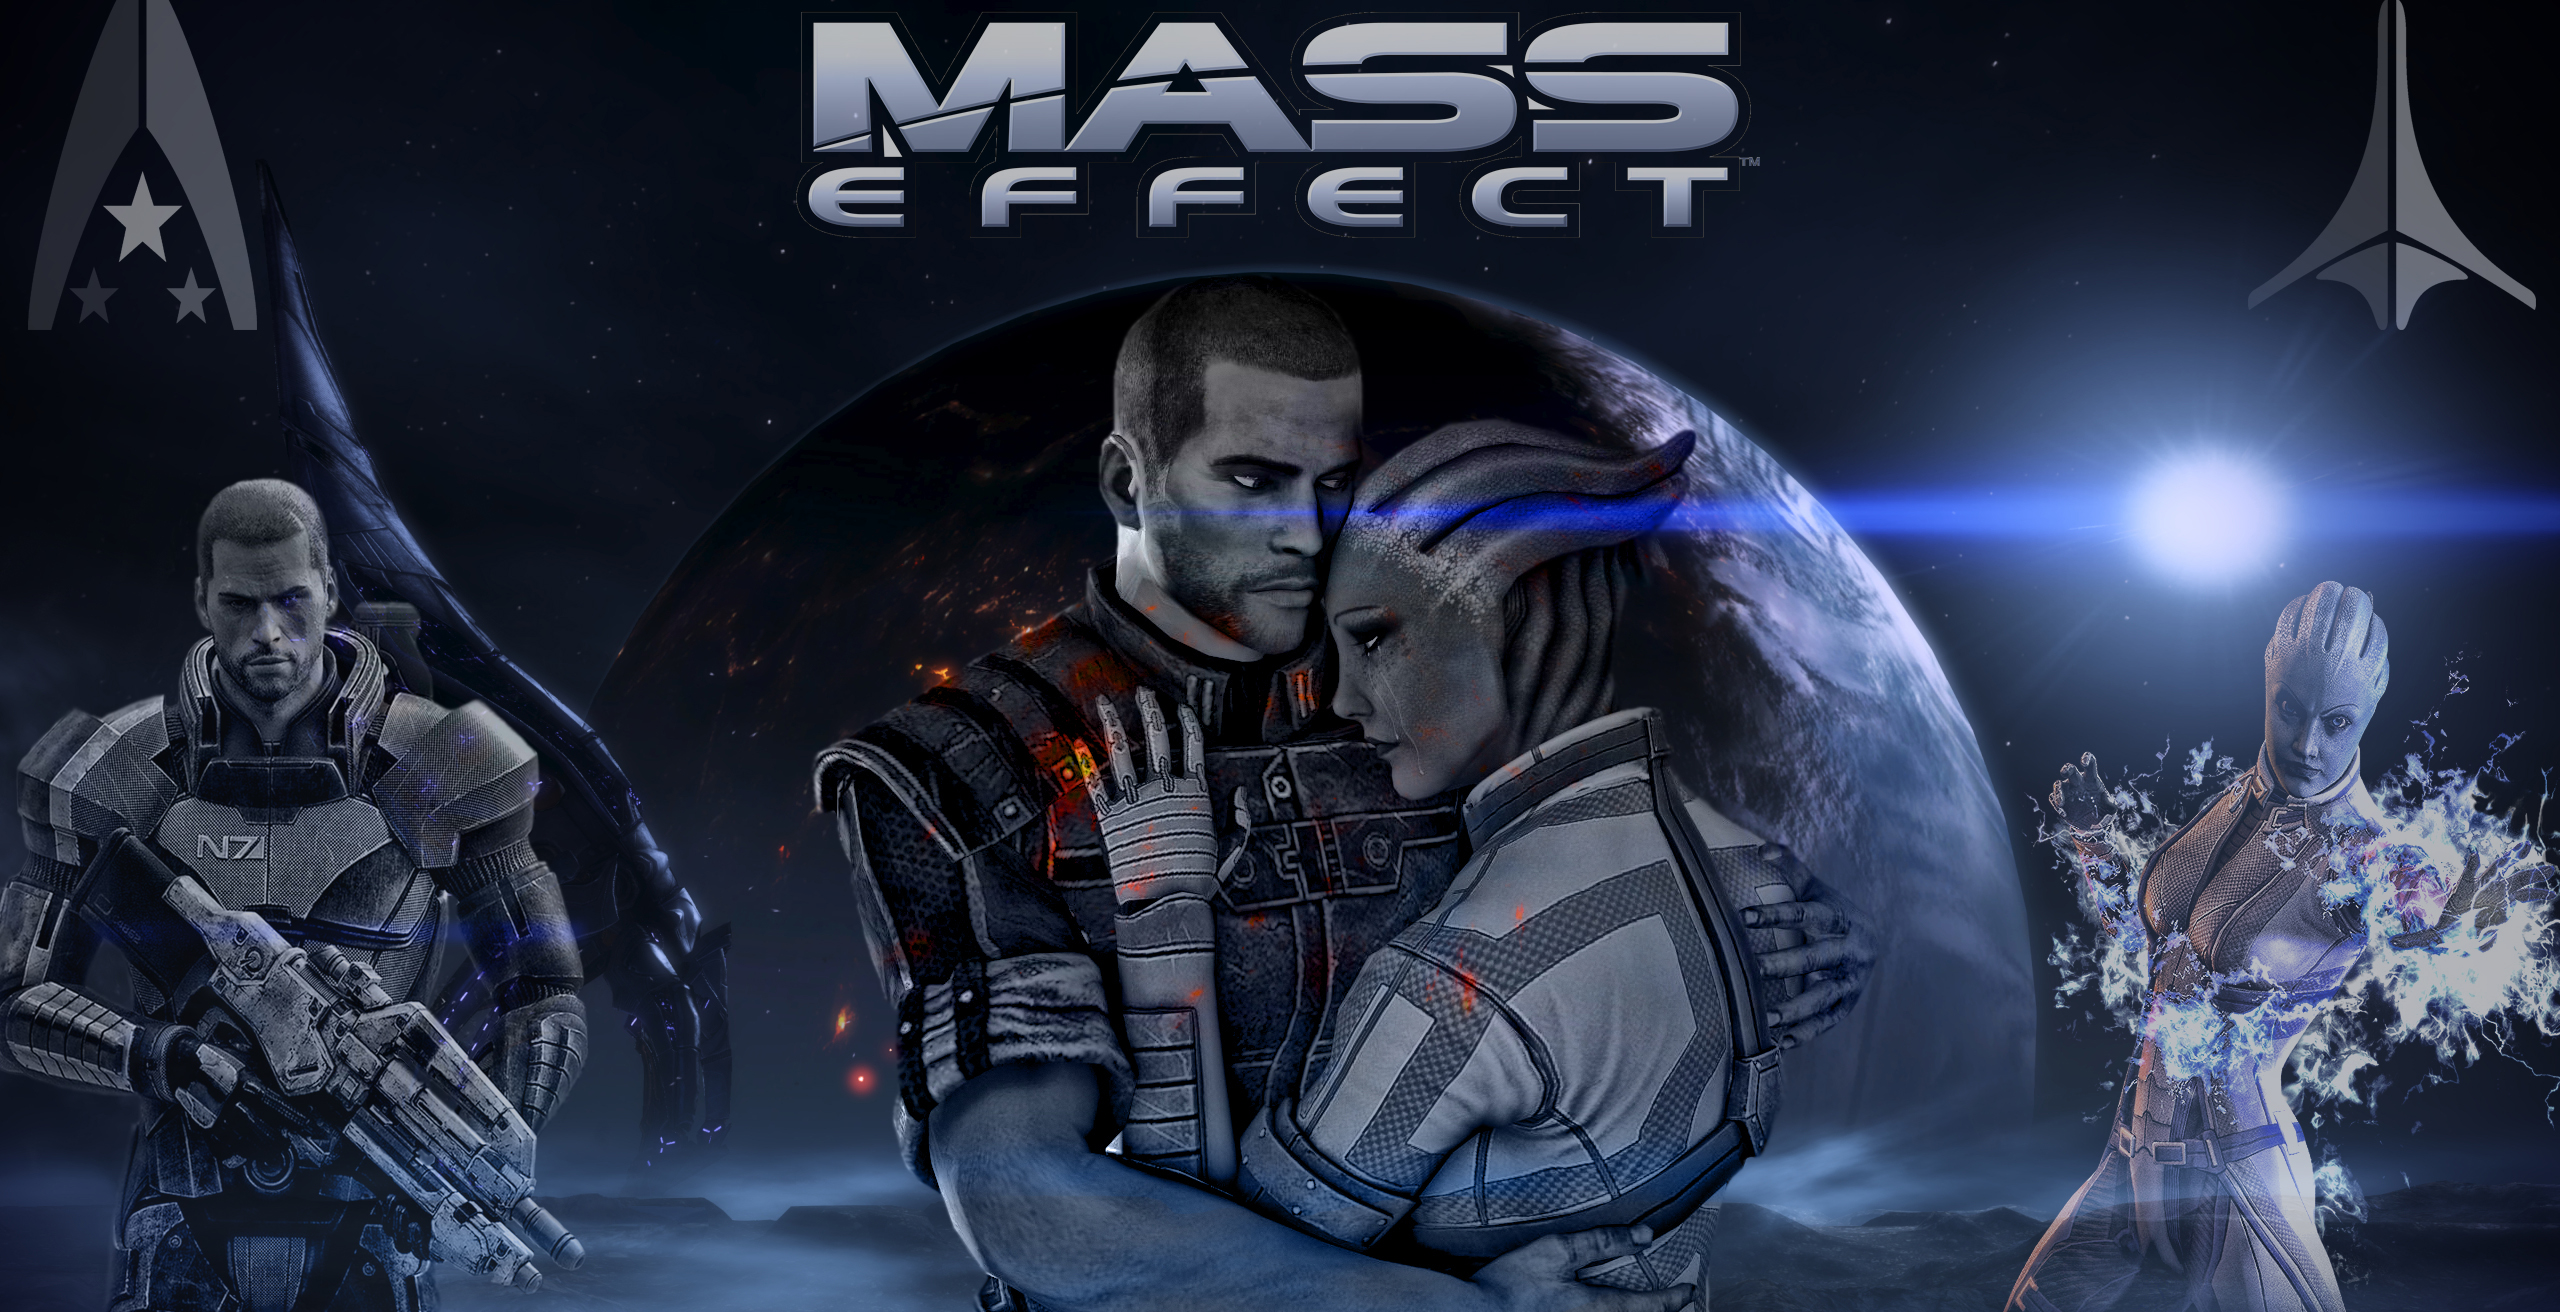 Mass Effect Liara And Shep by dilong182 on DeviantArt